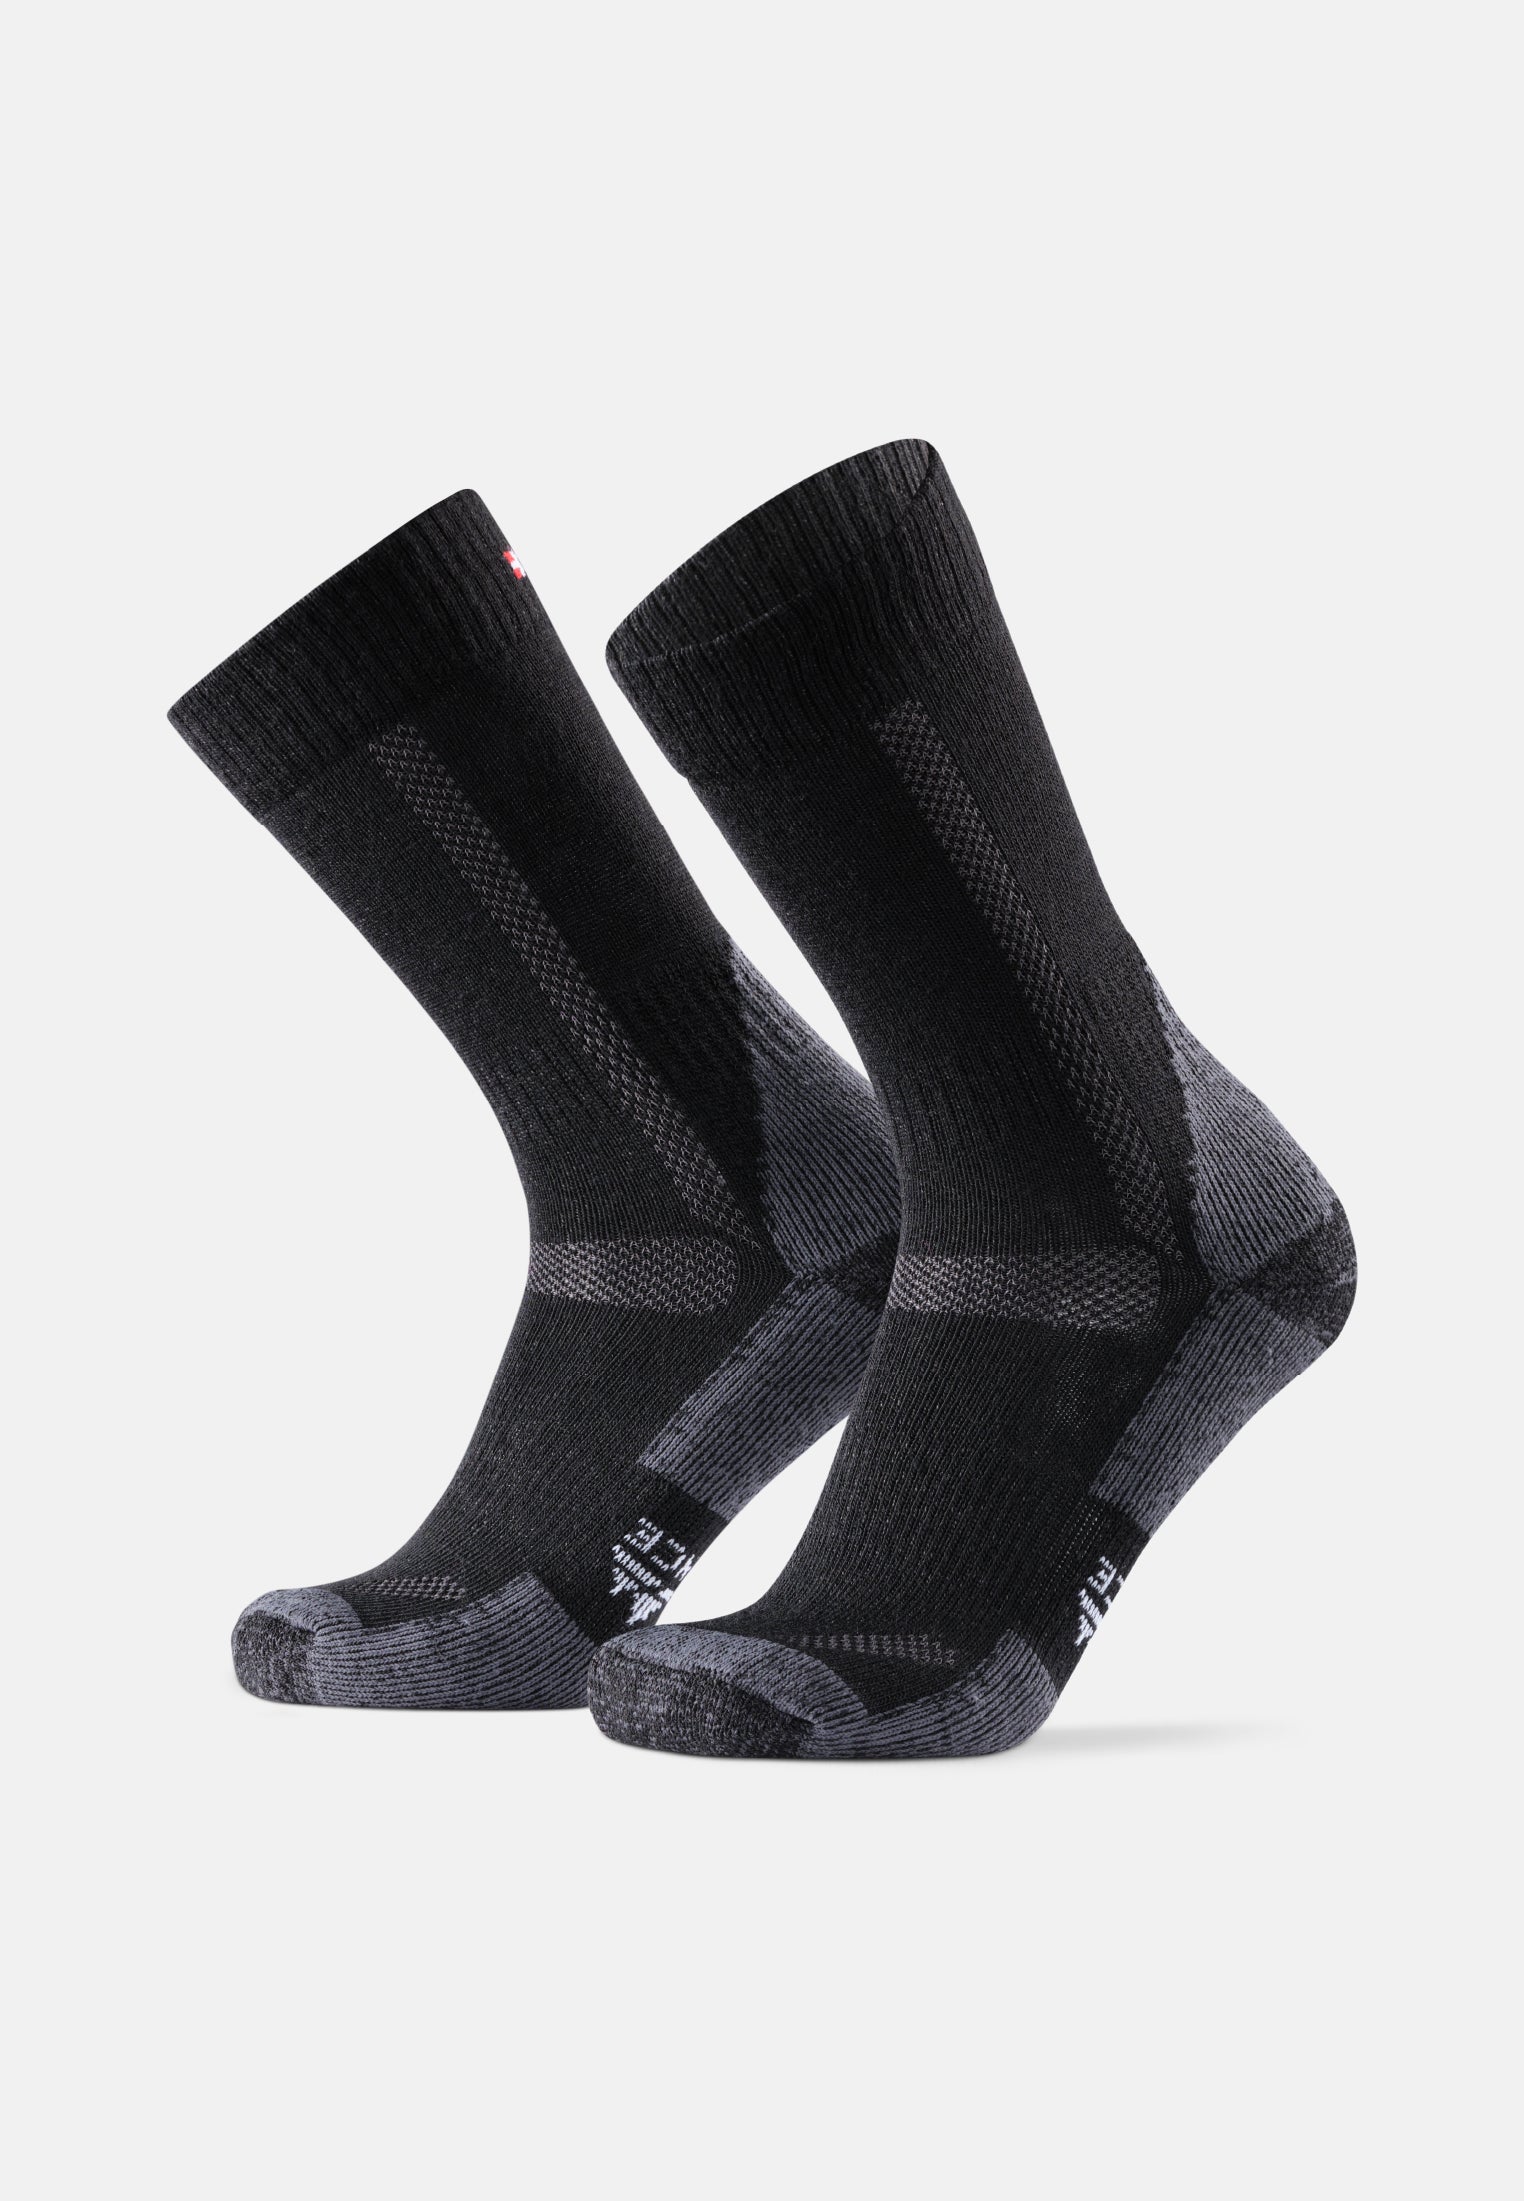  DANISH ENDURANCE Merino Wool Cycling Socks 2-pack Black MEDIUM  : Clothing, Shoes & Jewelry